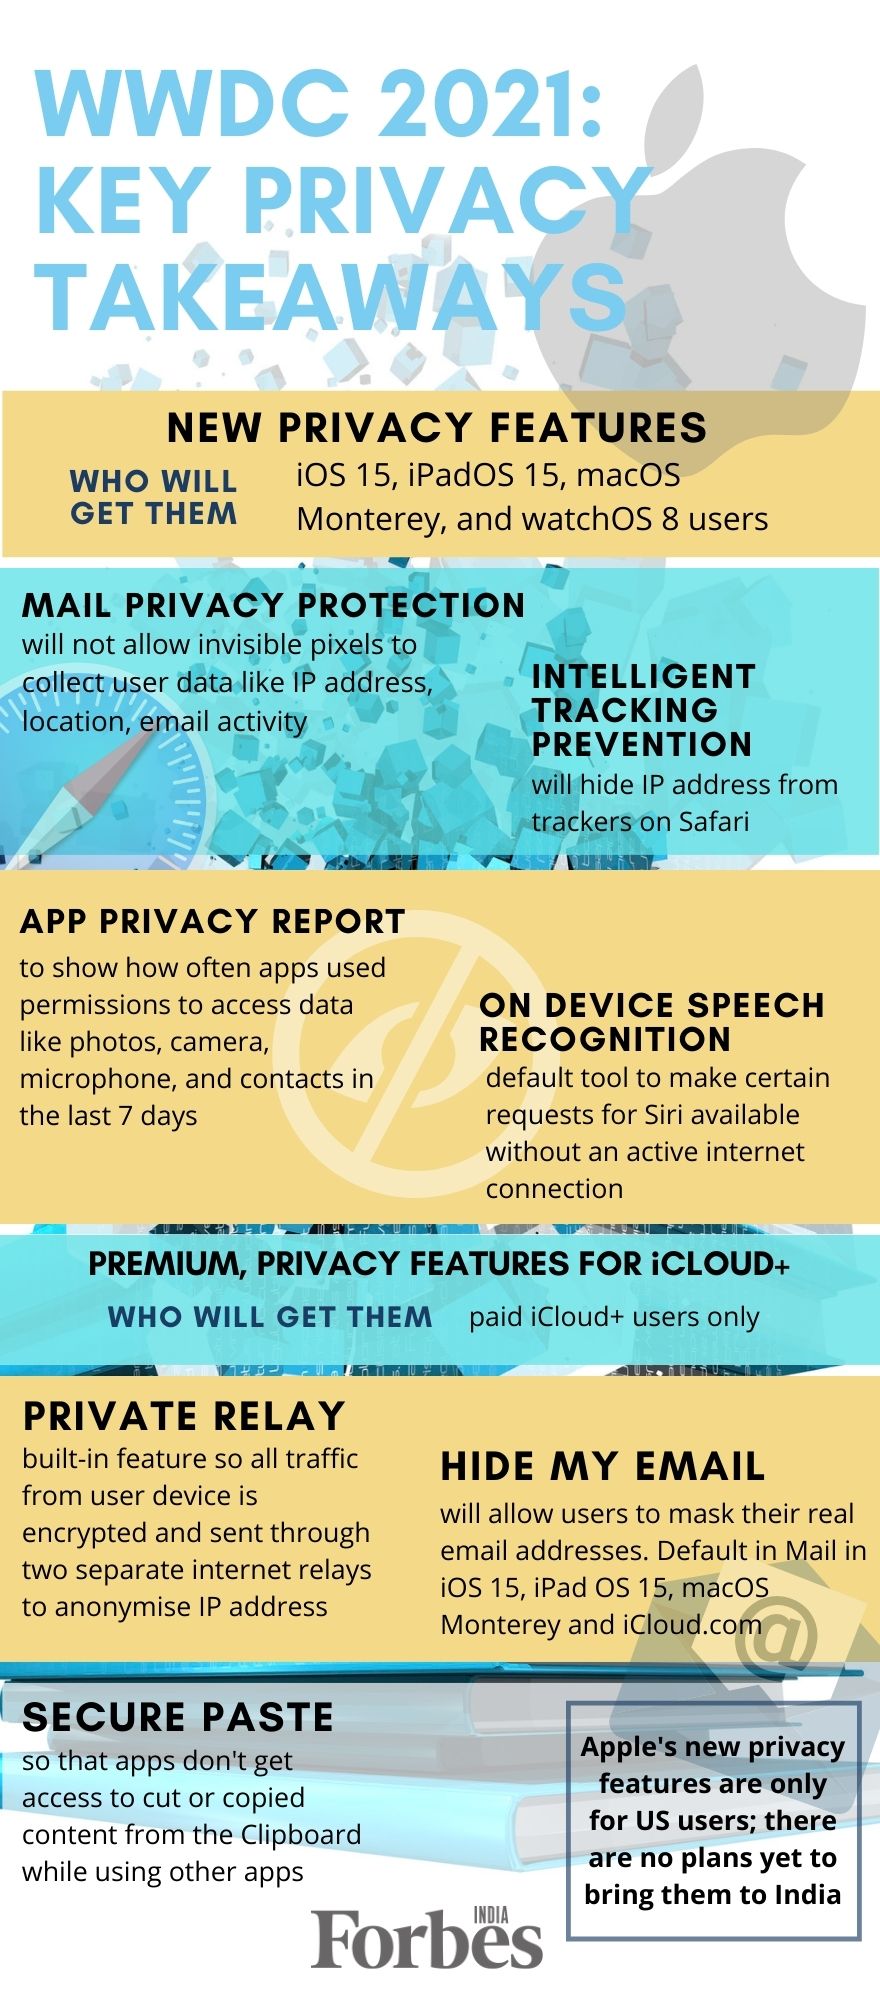 Key privacy takeaways from Apple's WWDC 2021